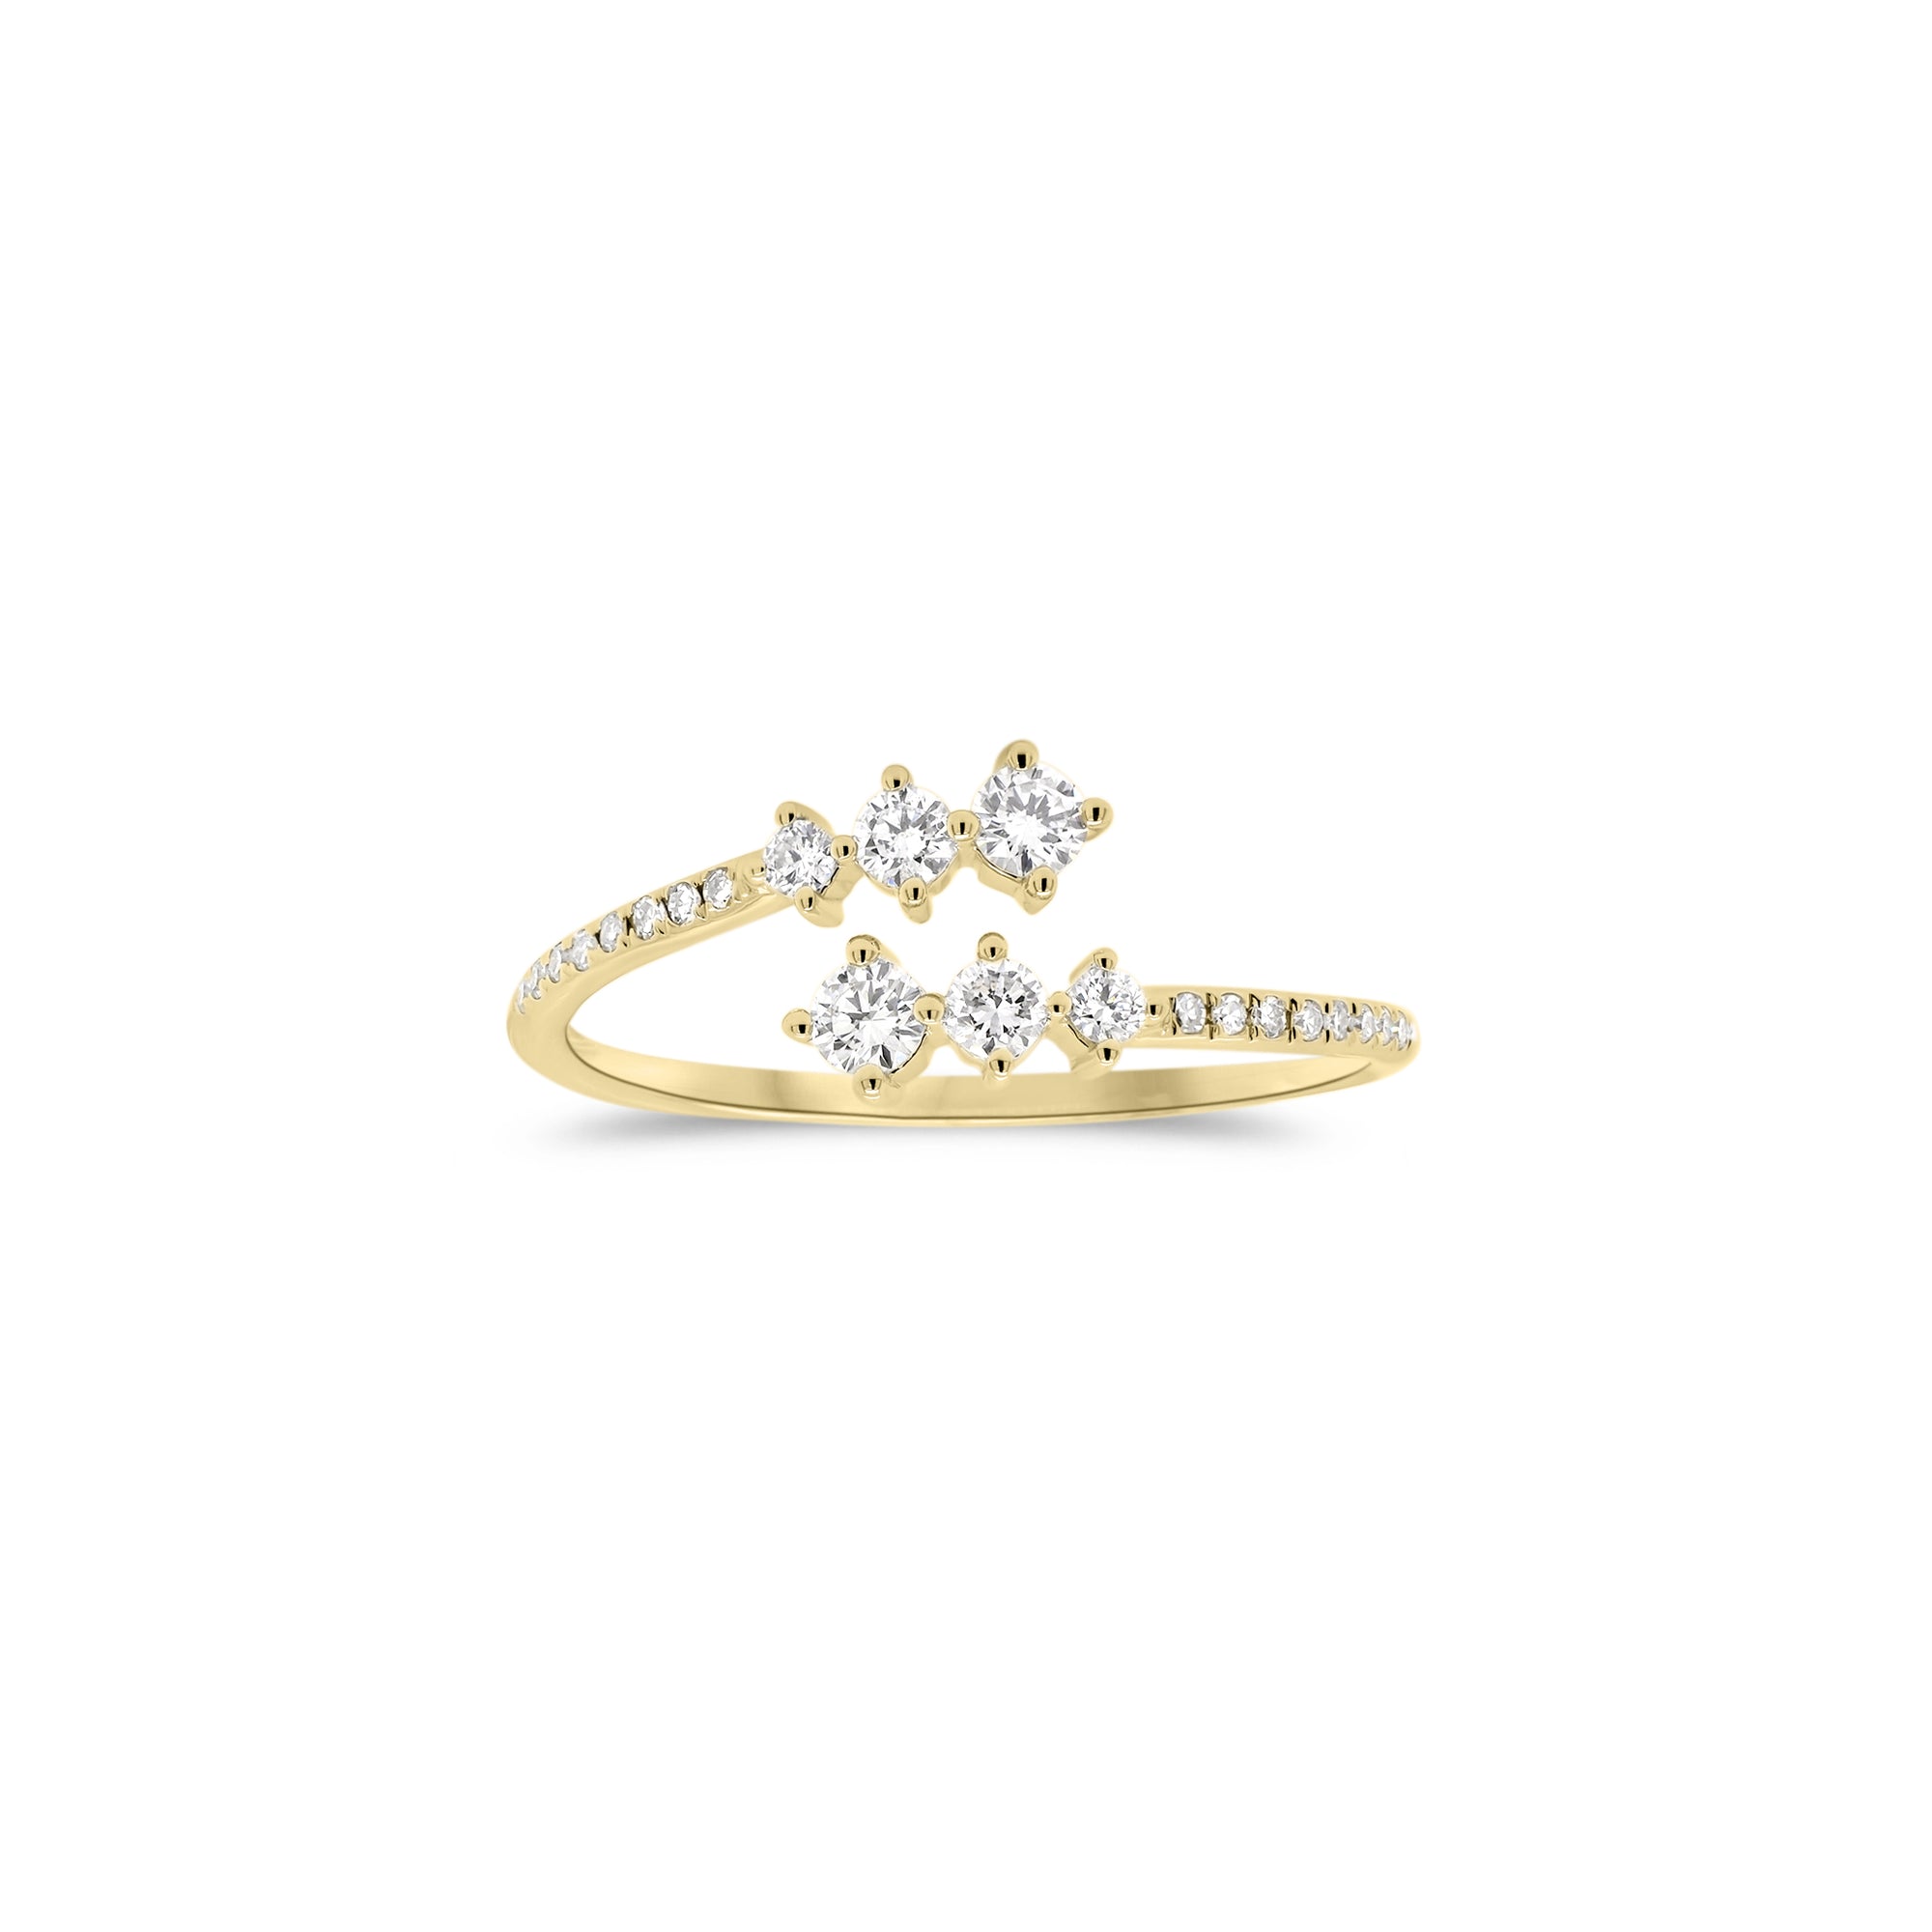 Graduated Diamond Wrap Pinky Ring  - 14K yellow gold weighing 1.23 grams  - 22 round diamonds totaling 0.25 carats